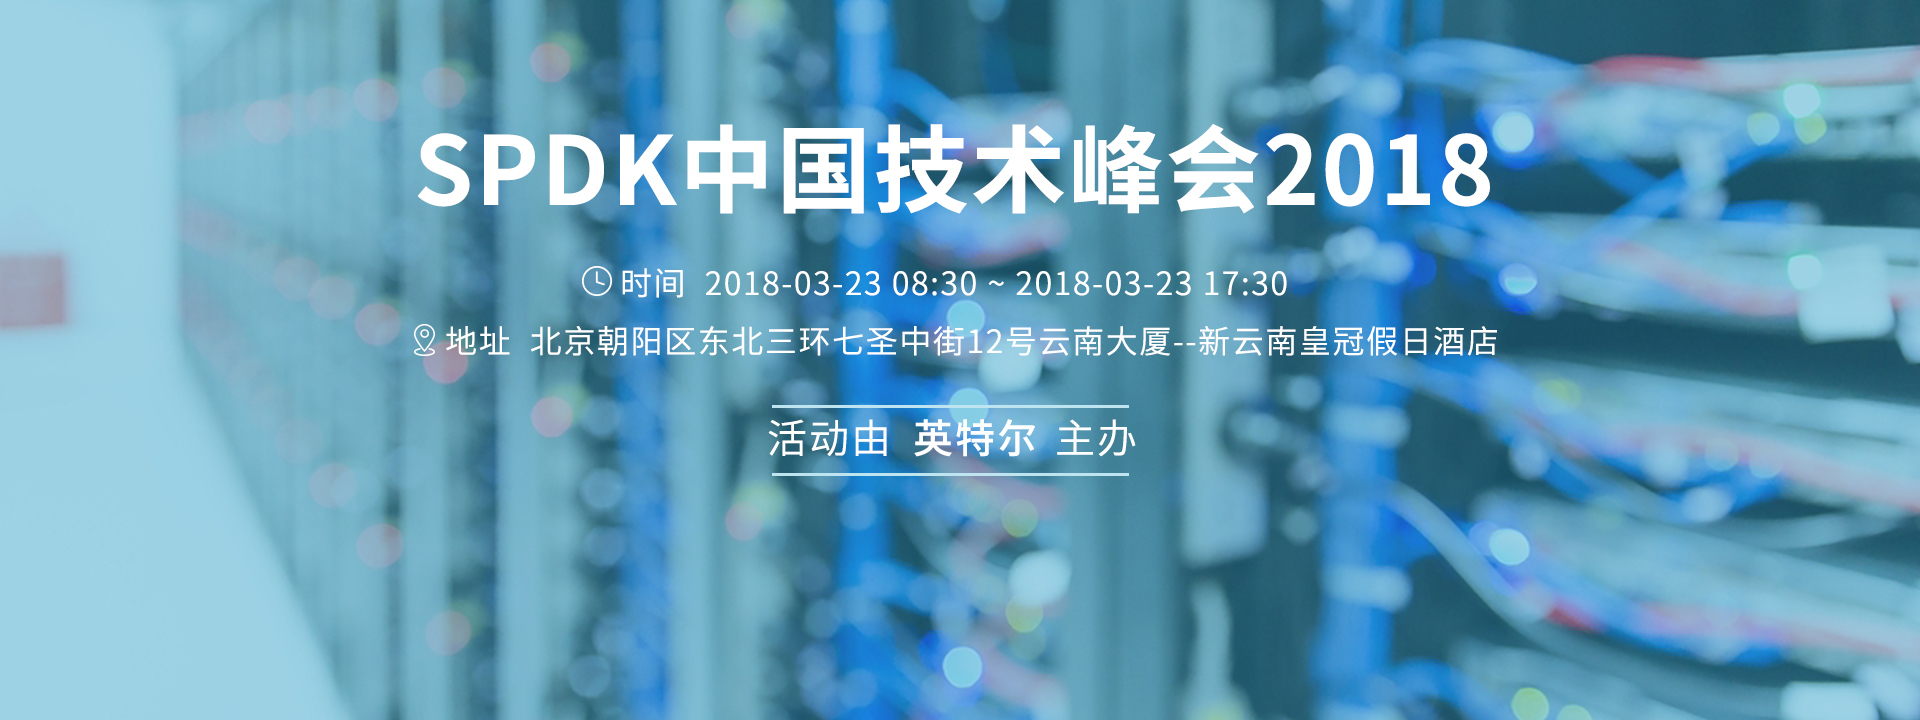 SPDK中国技术峰会2018